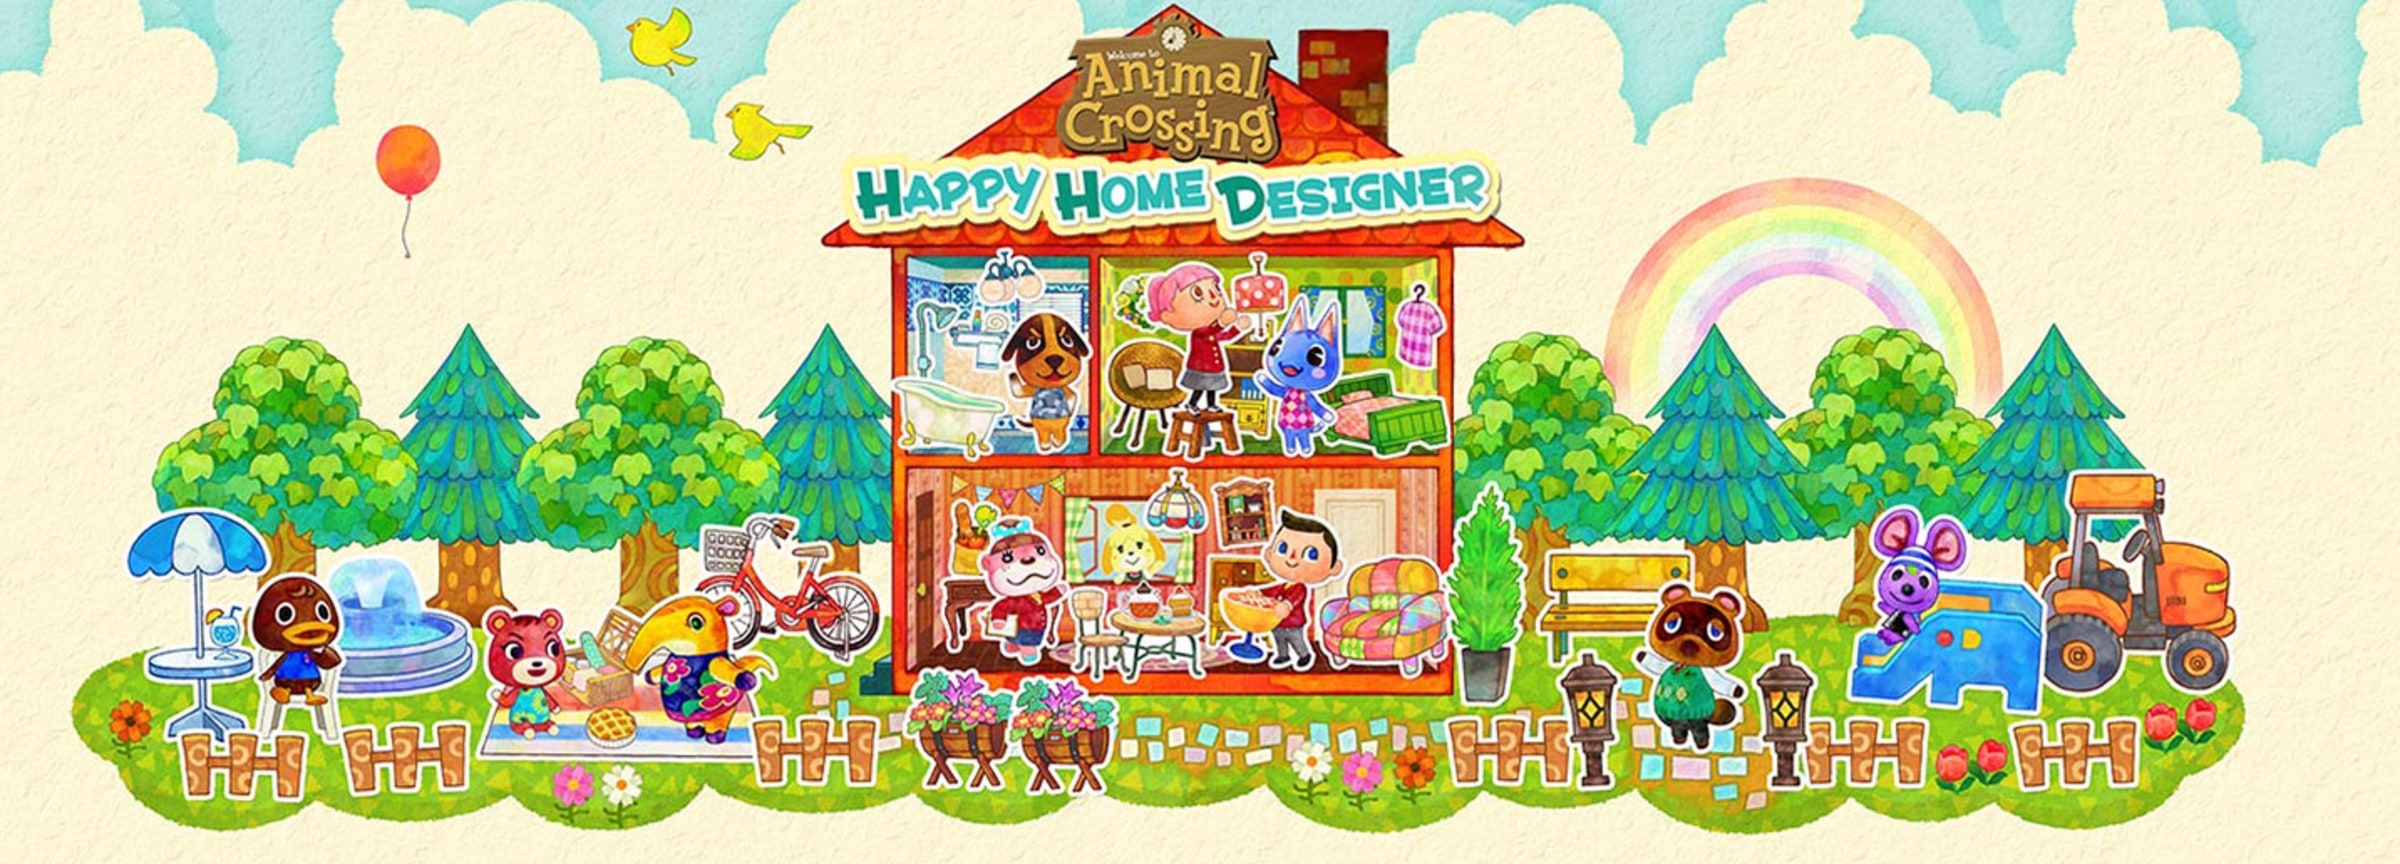 Animal Crossing: Happy Home Designer for Nintendo 3DS - Nintendo Official  Site